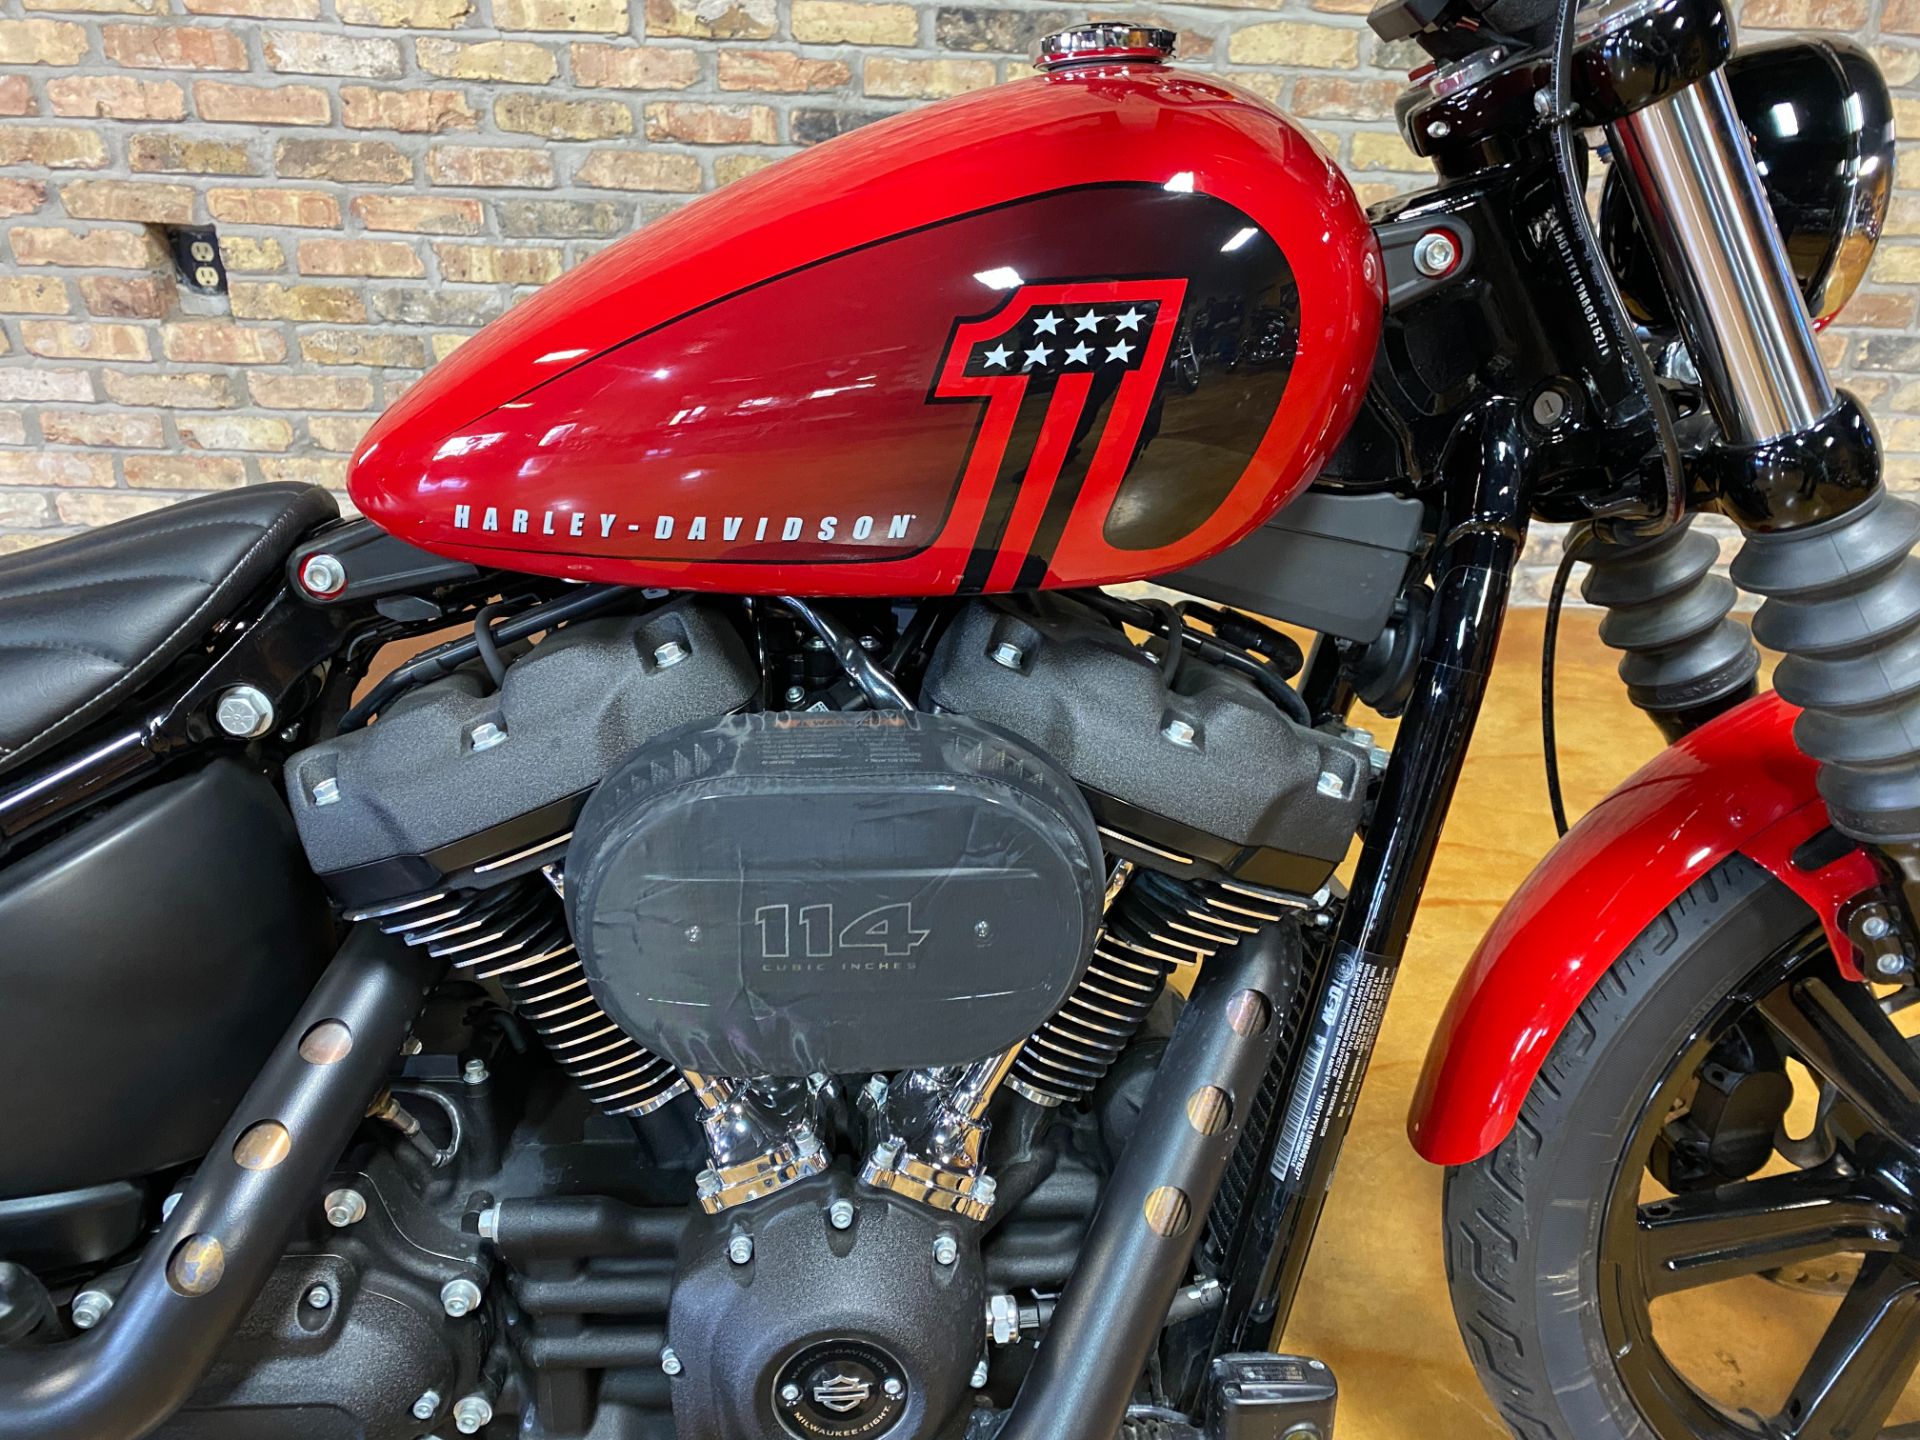 2022 Harley-Davidson Street Bob® 114 in Big Bend, Wisconsin - Photo 4